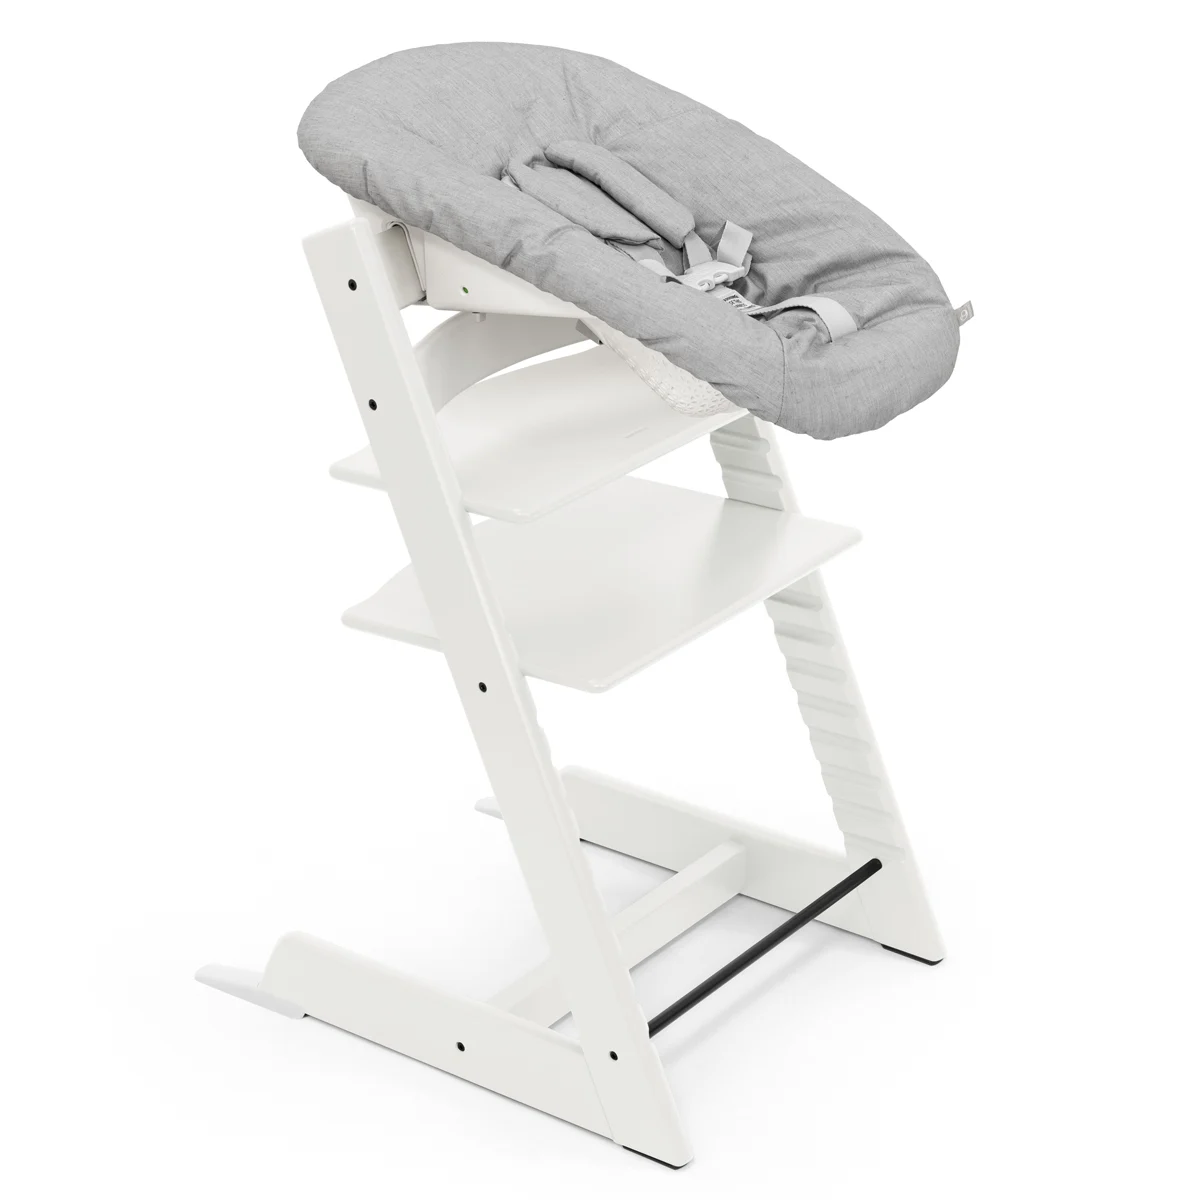 Набор Stokke Newborn Tripp Trapp White: стульчик и кресло для новорожденных (k.100107.52) - фото 1